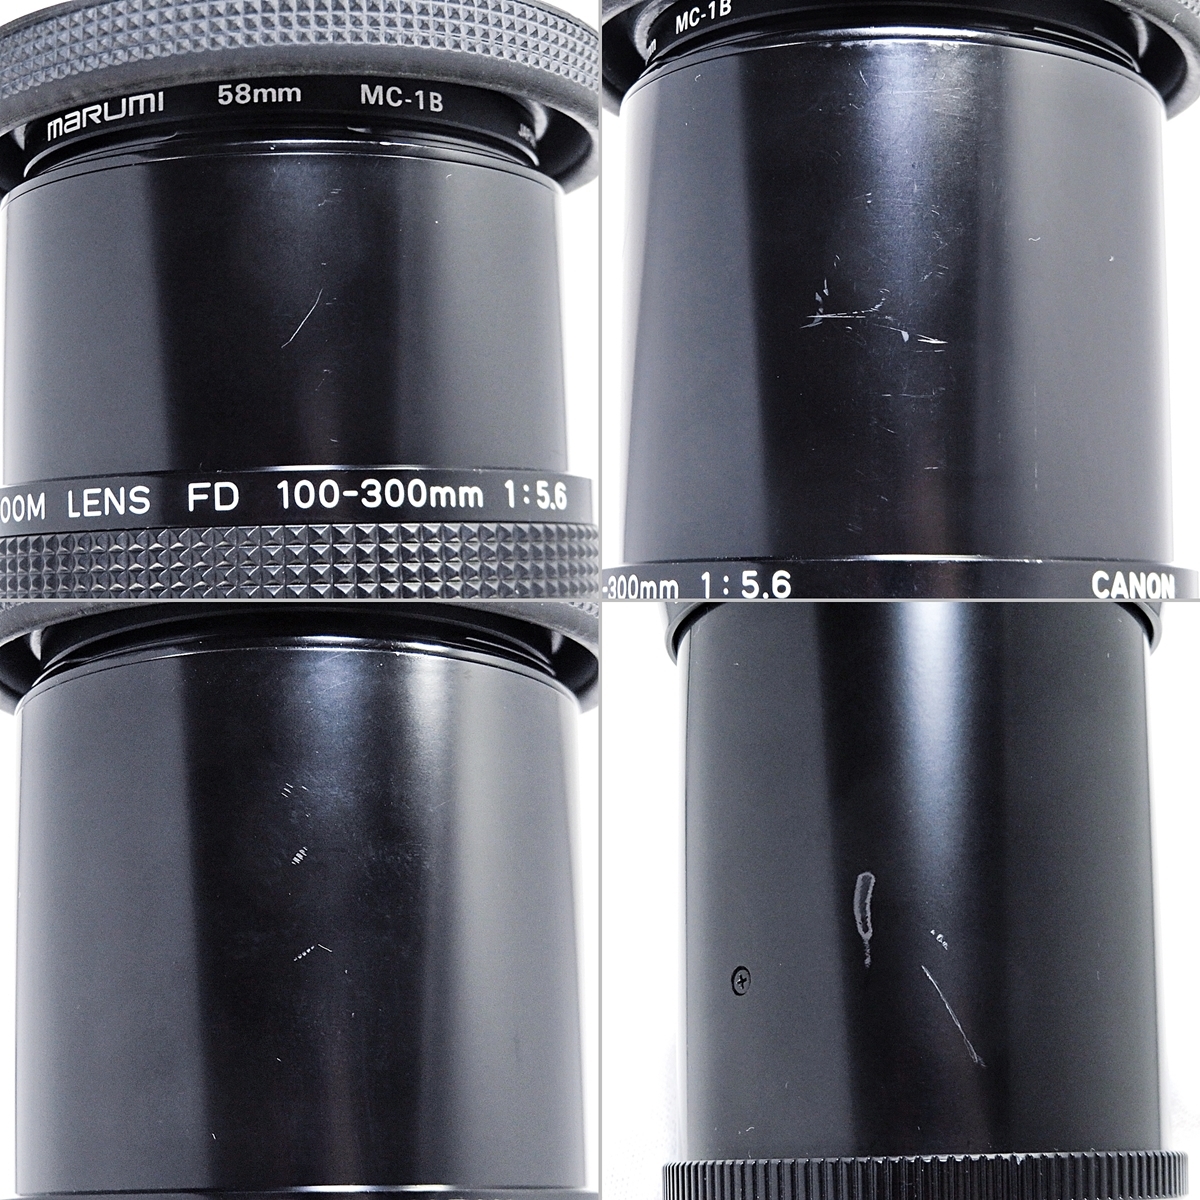 Canon ZOOM LENS FD 100-300mm 1:5.6 MARUMI 58mm MC-1B キャノン